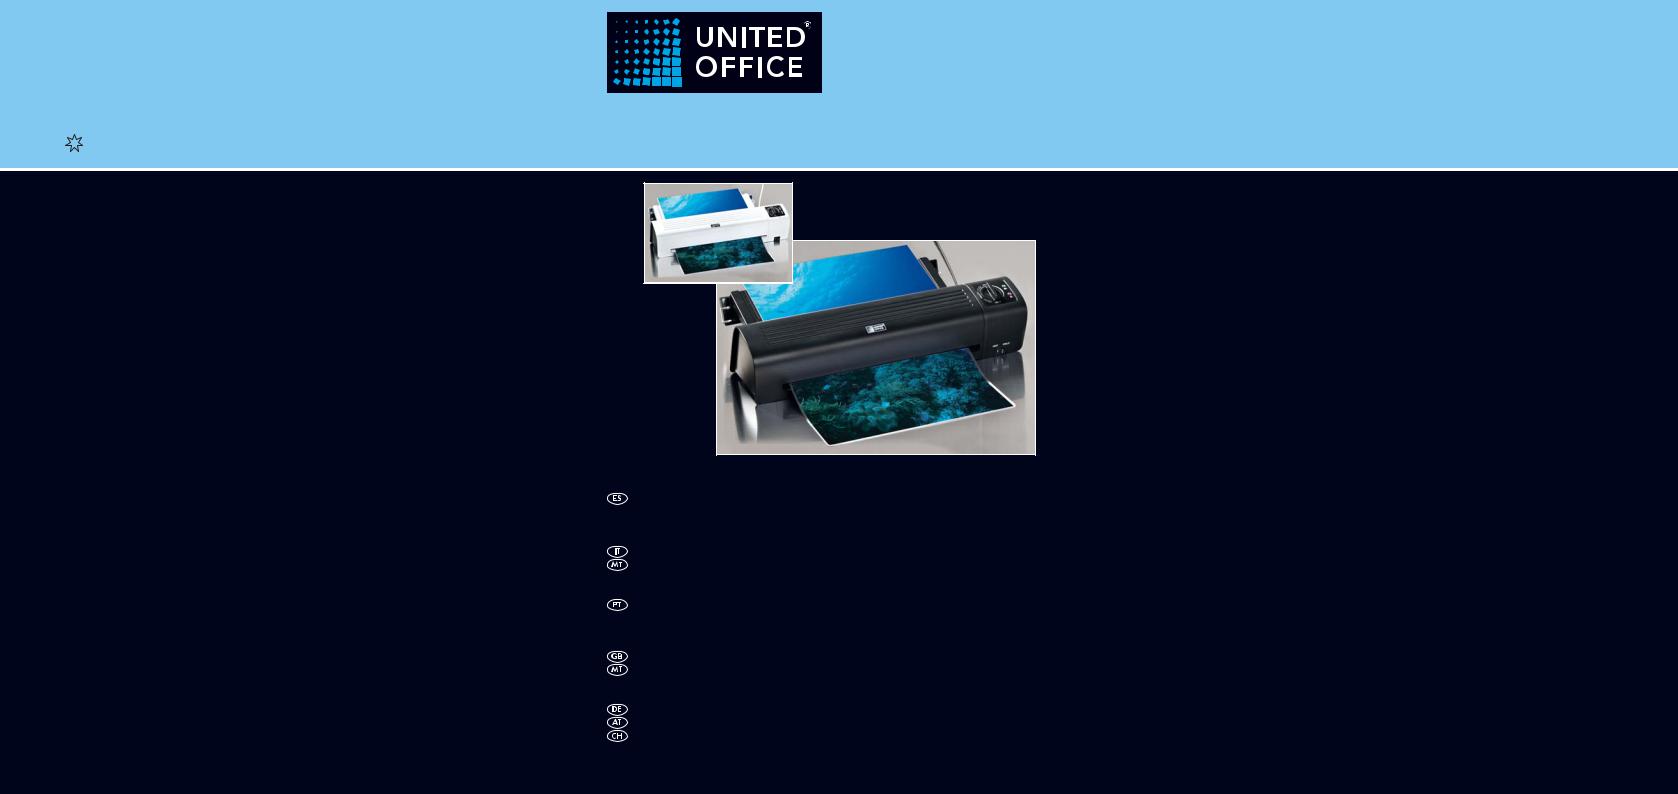 United Office ULG 300 User Manual